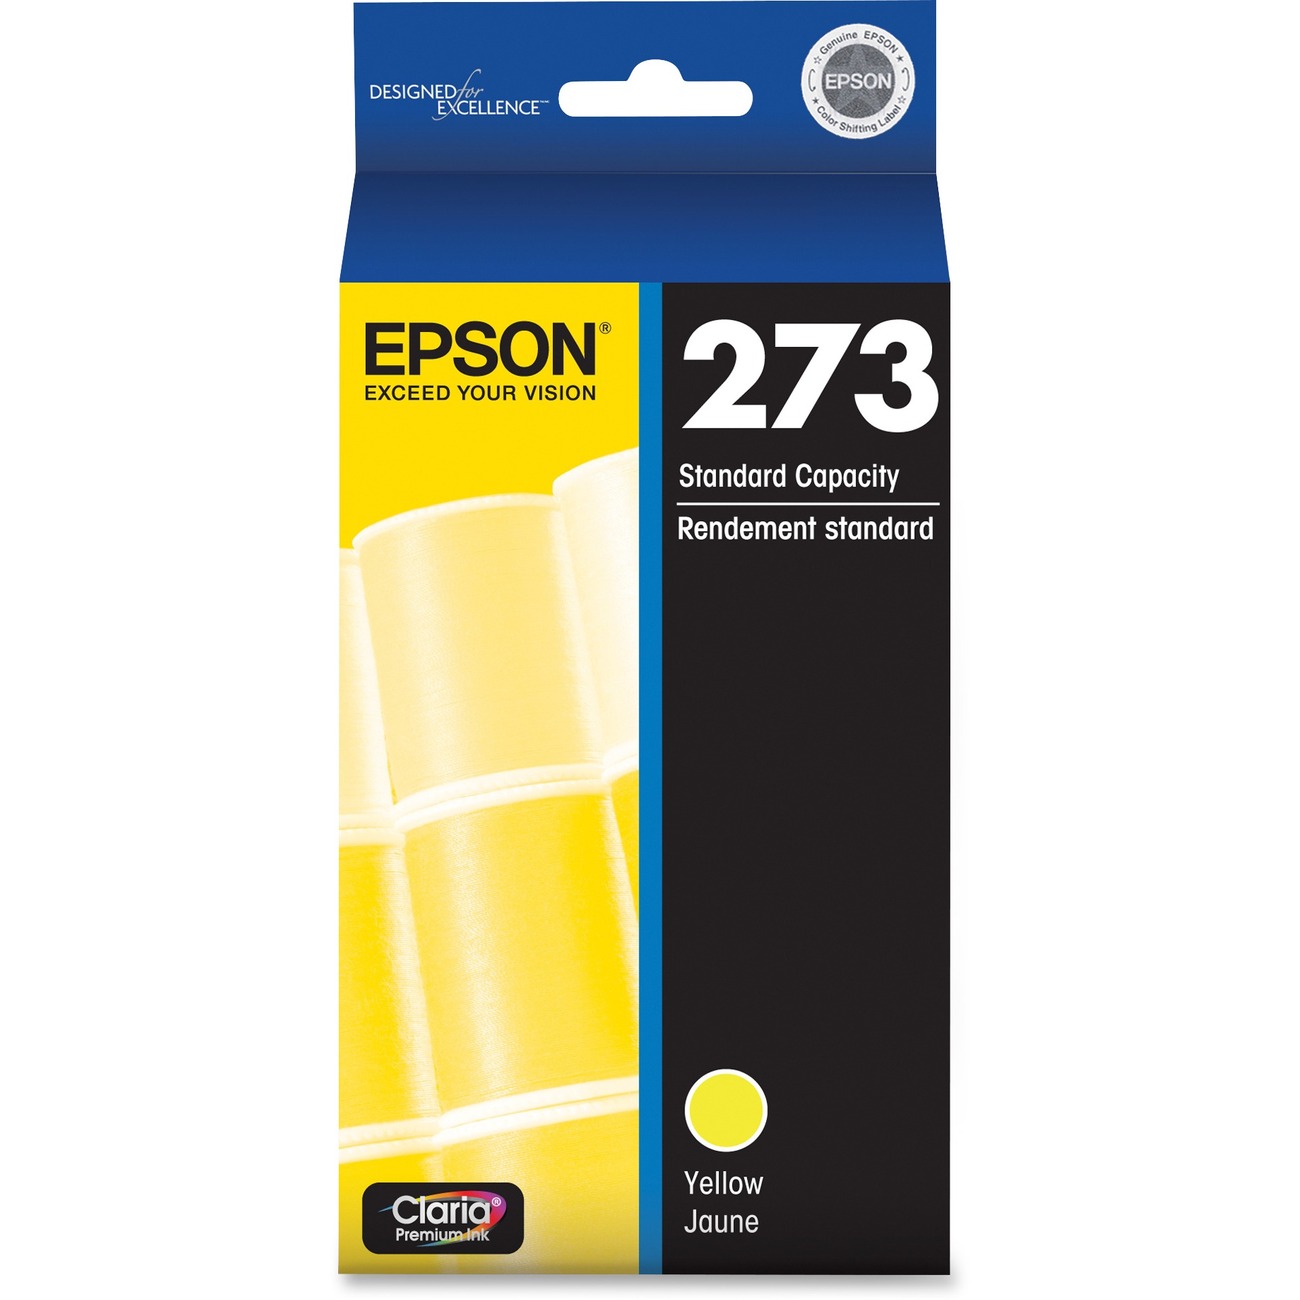 Epson T273420 Claria Premium 273 Yellow